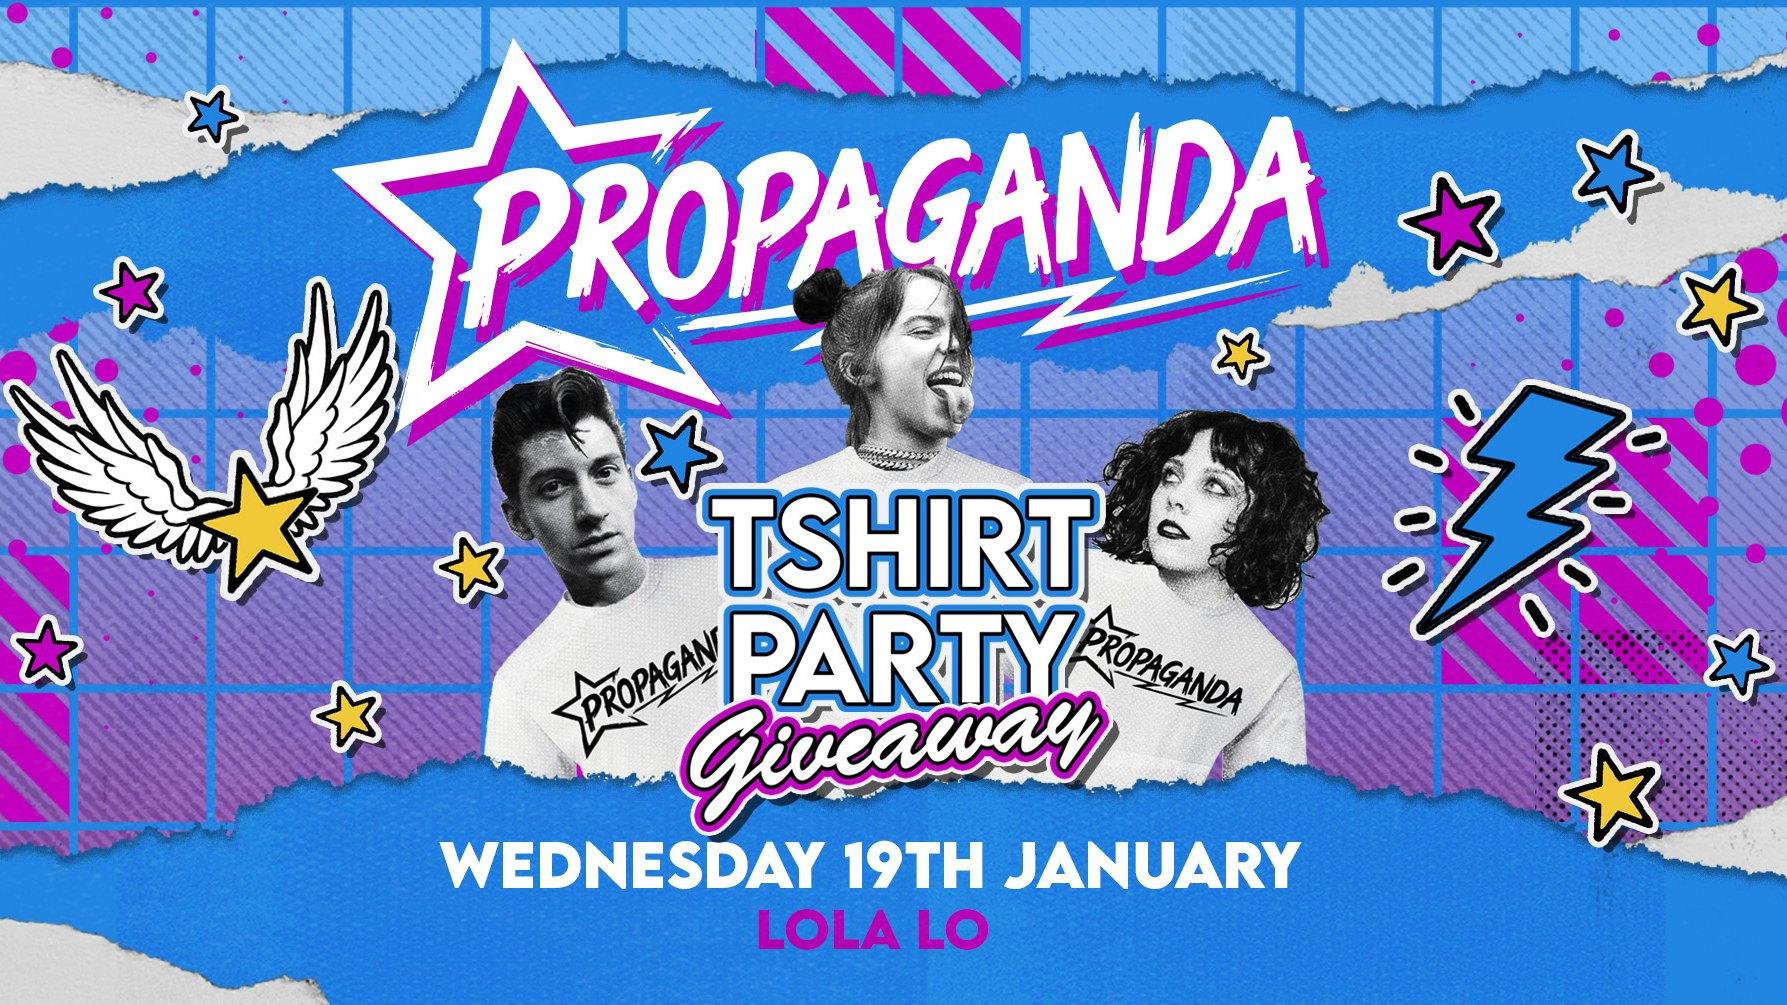 Propaganda Cambridge – T-shirt Giveaway Party!